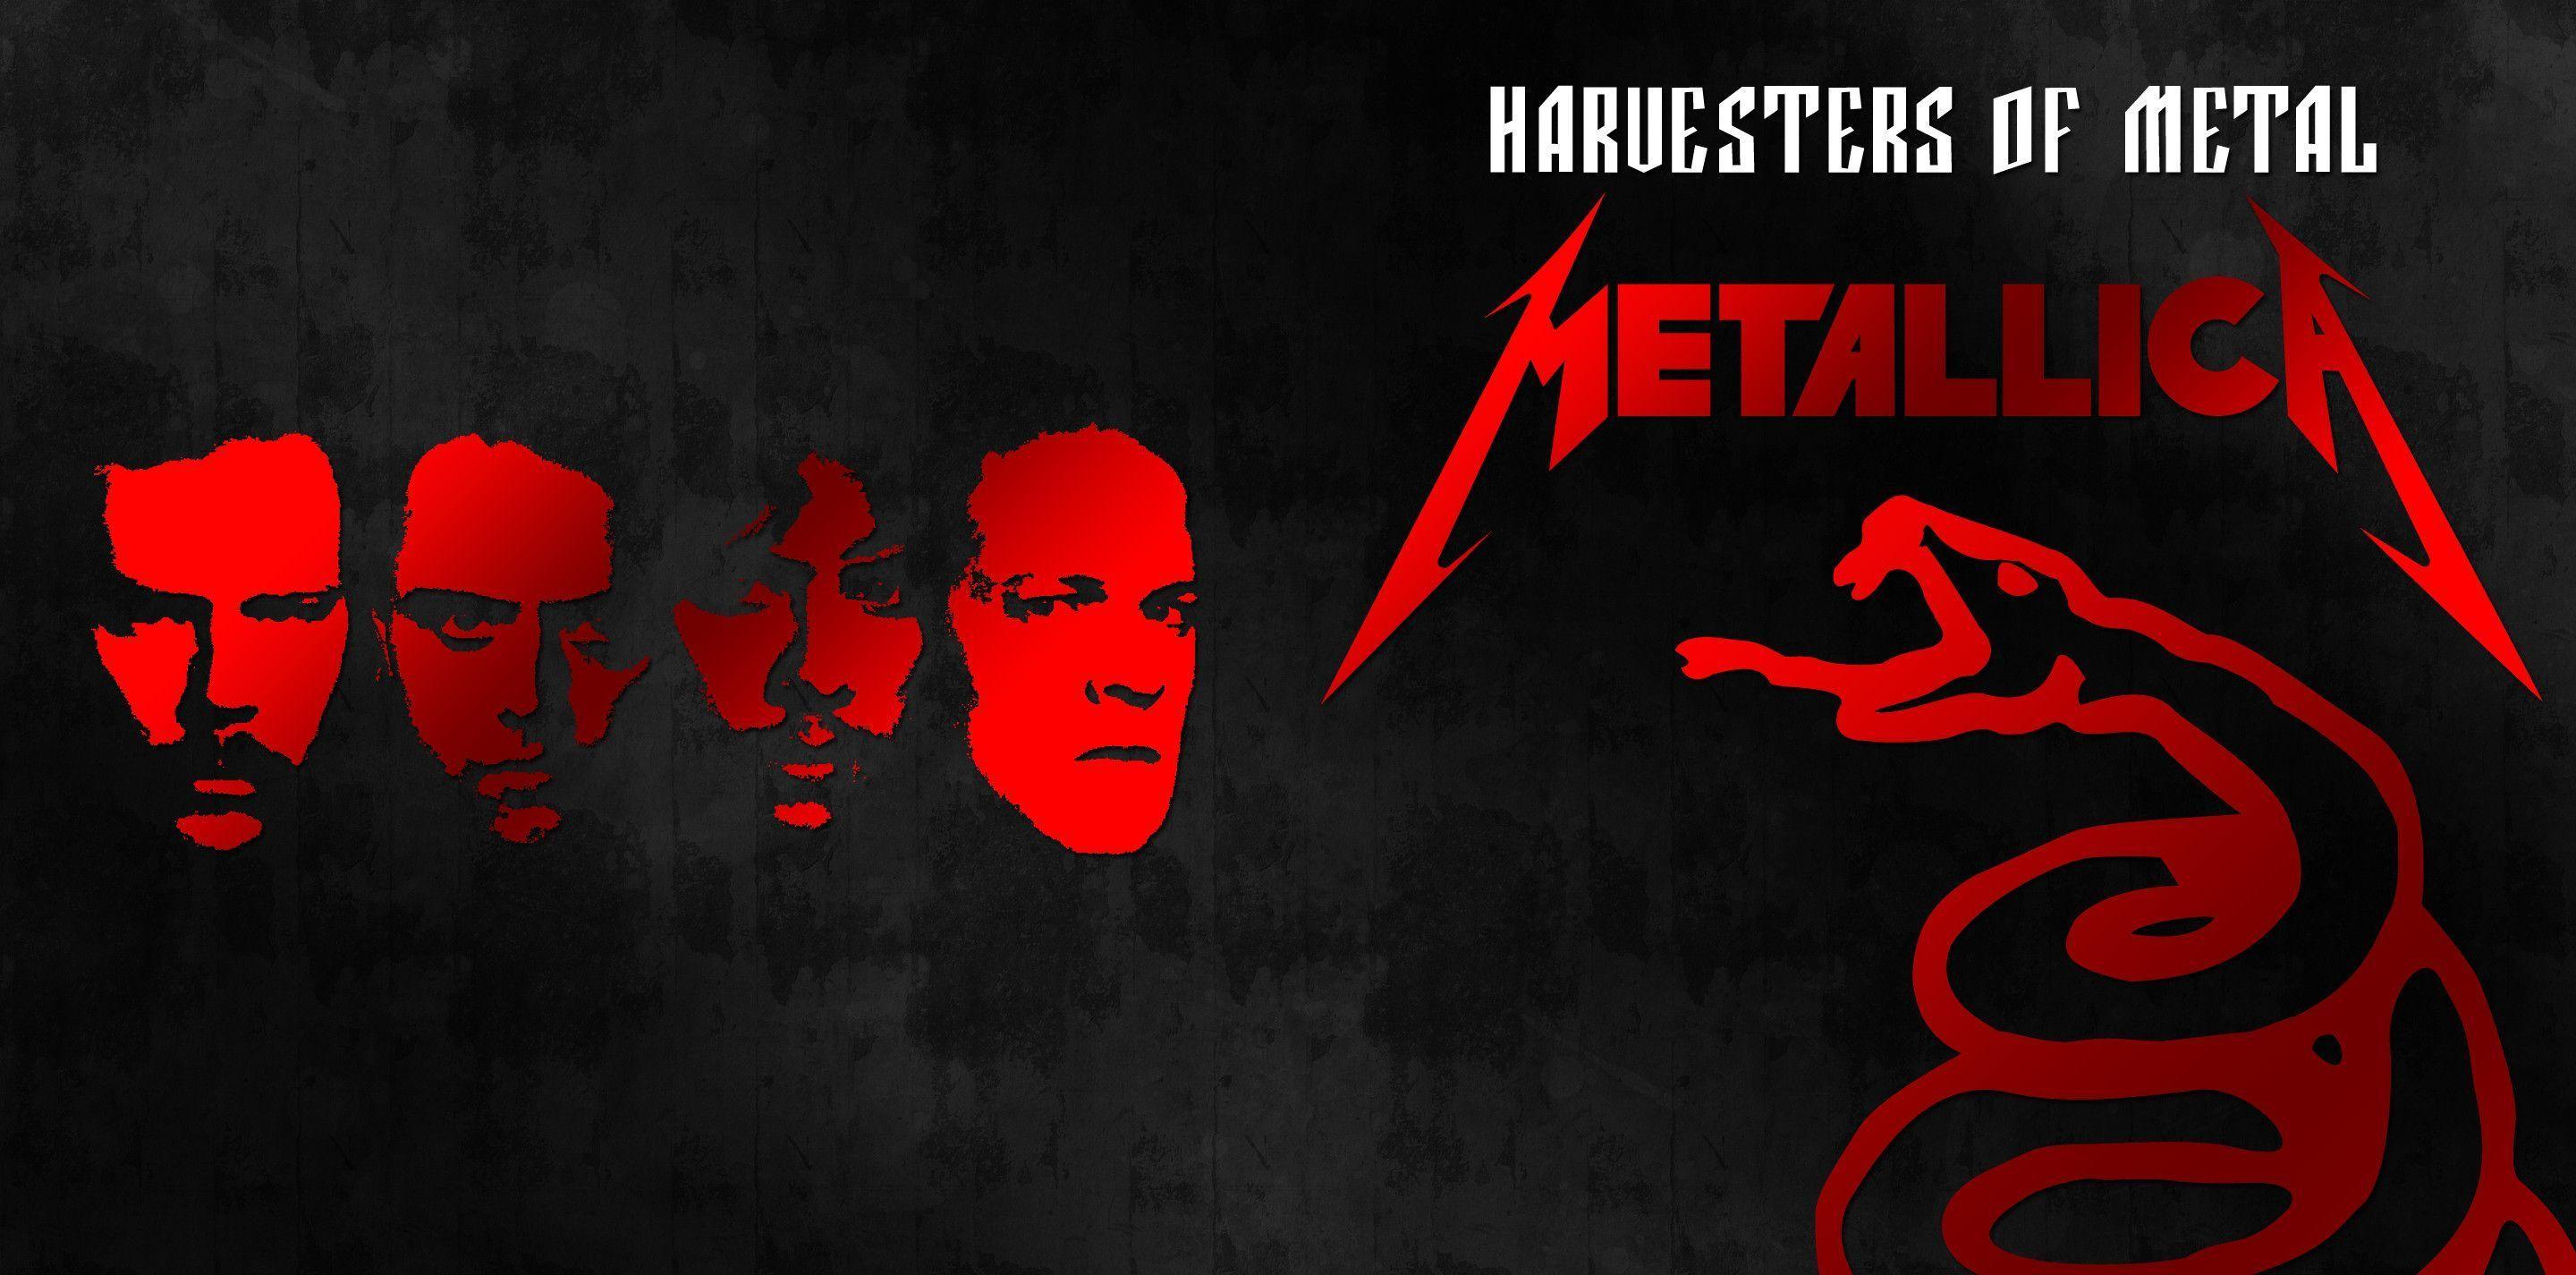 METALLICA thrash metal heavy album cover art rw wallpaper